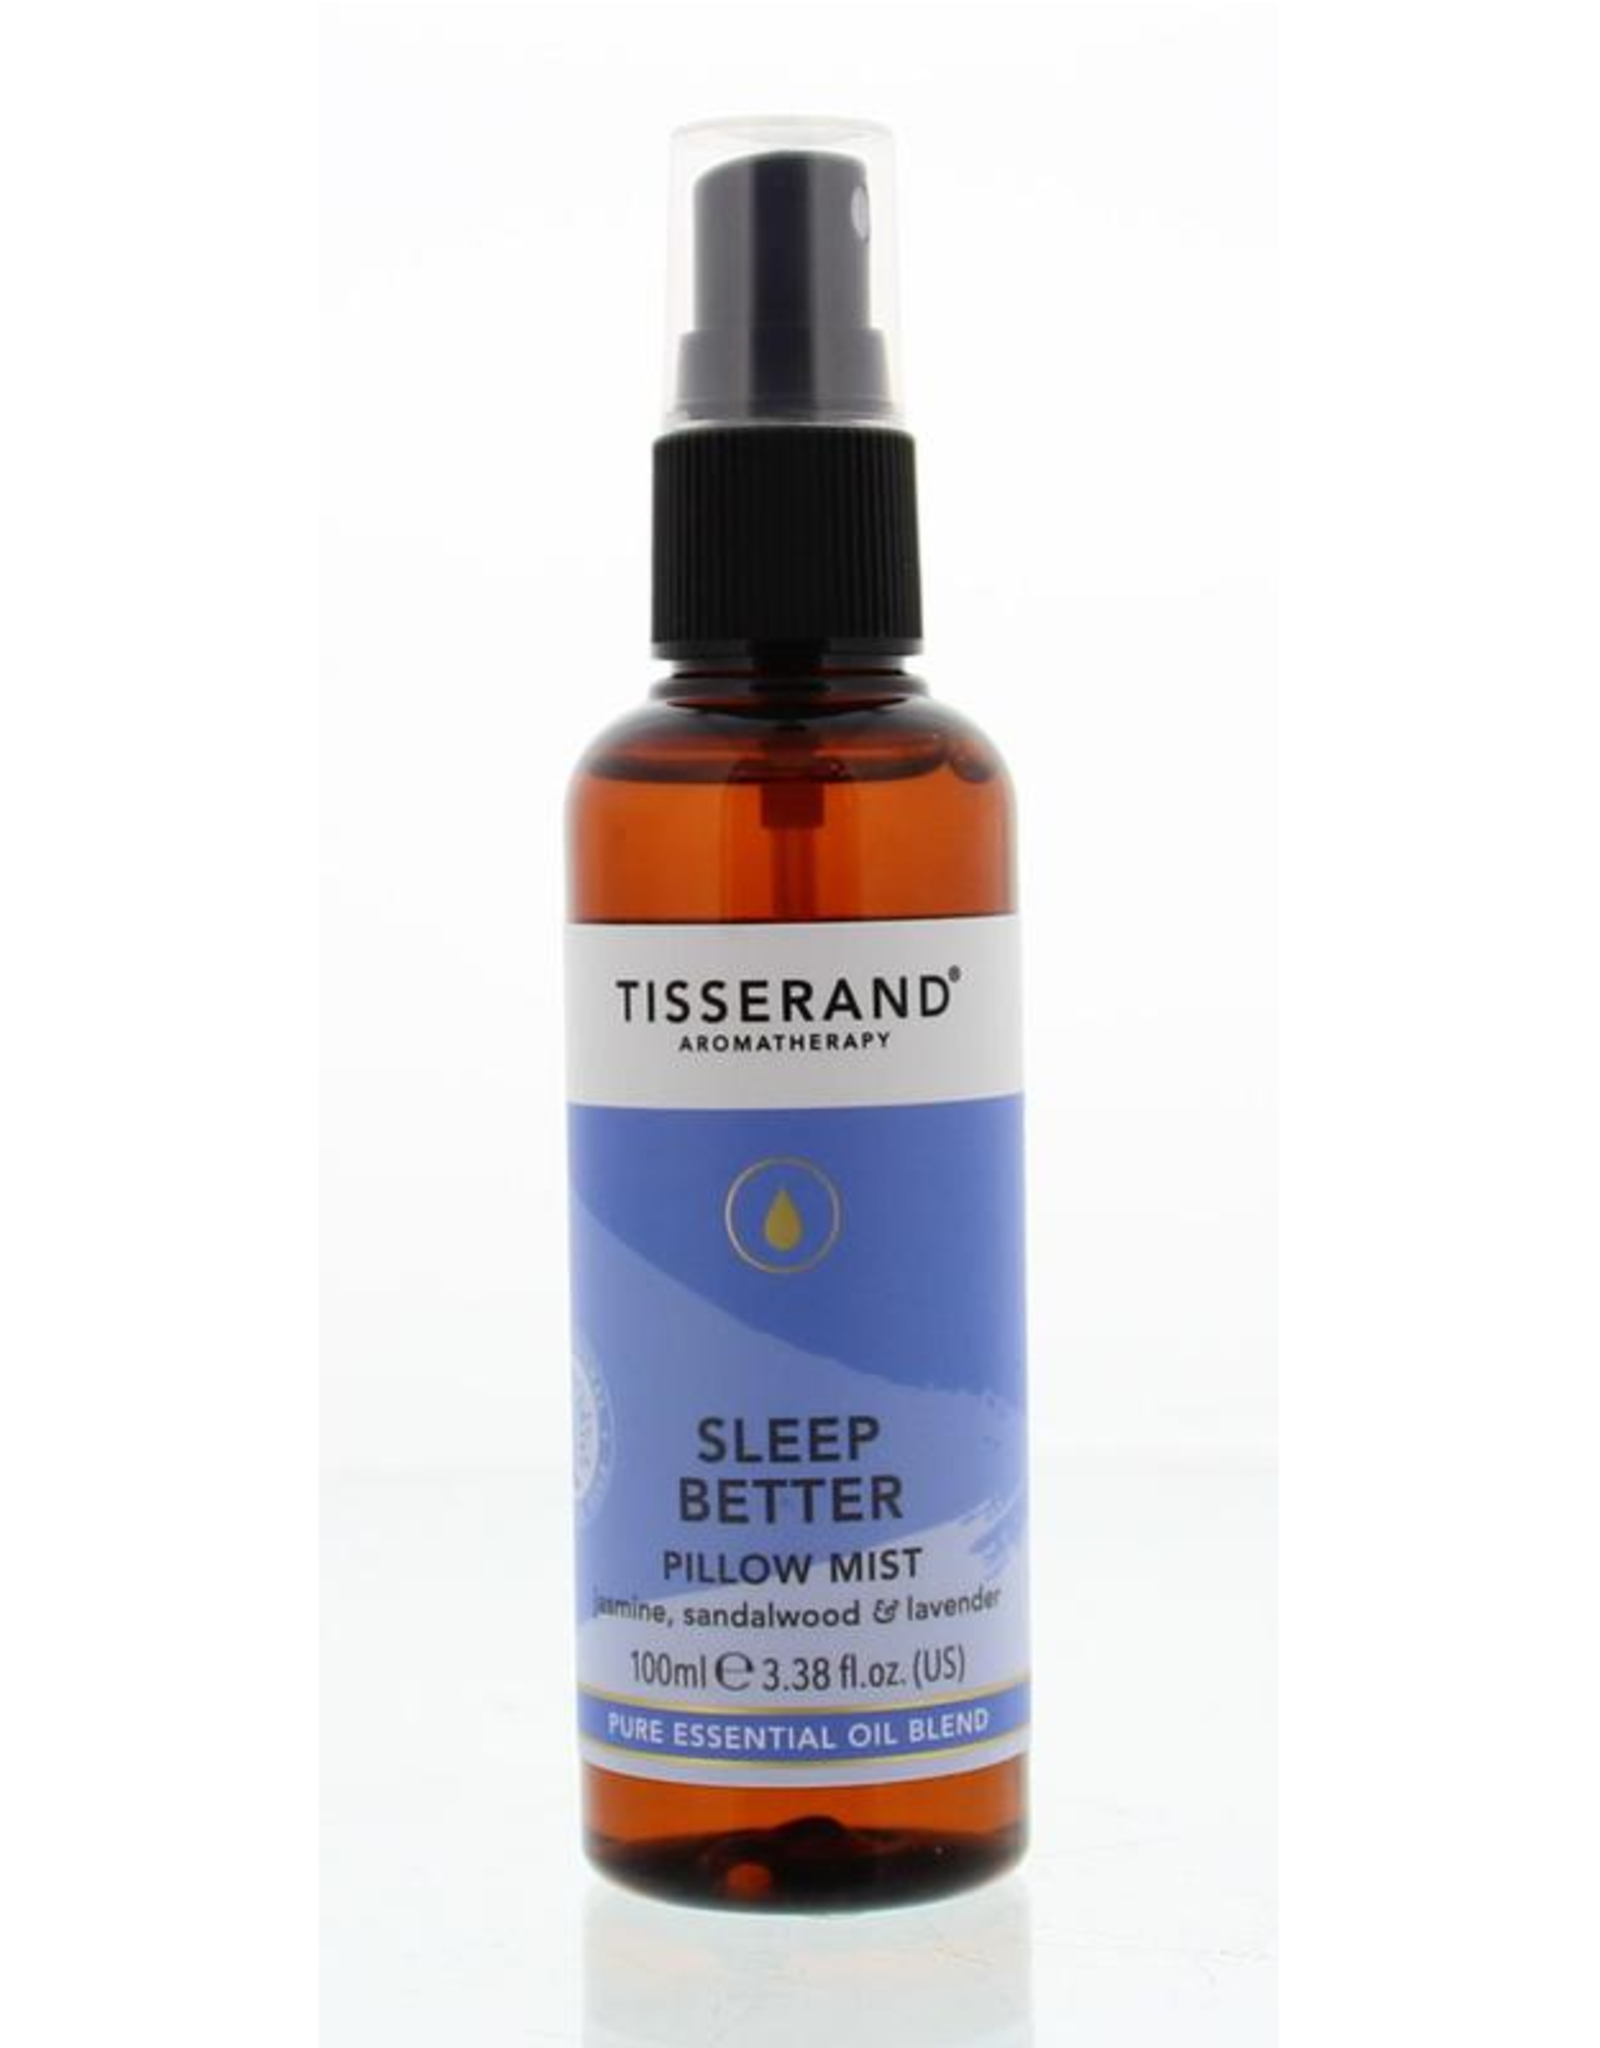 Tisserand Pillow mist spray sleep better 100ml